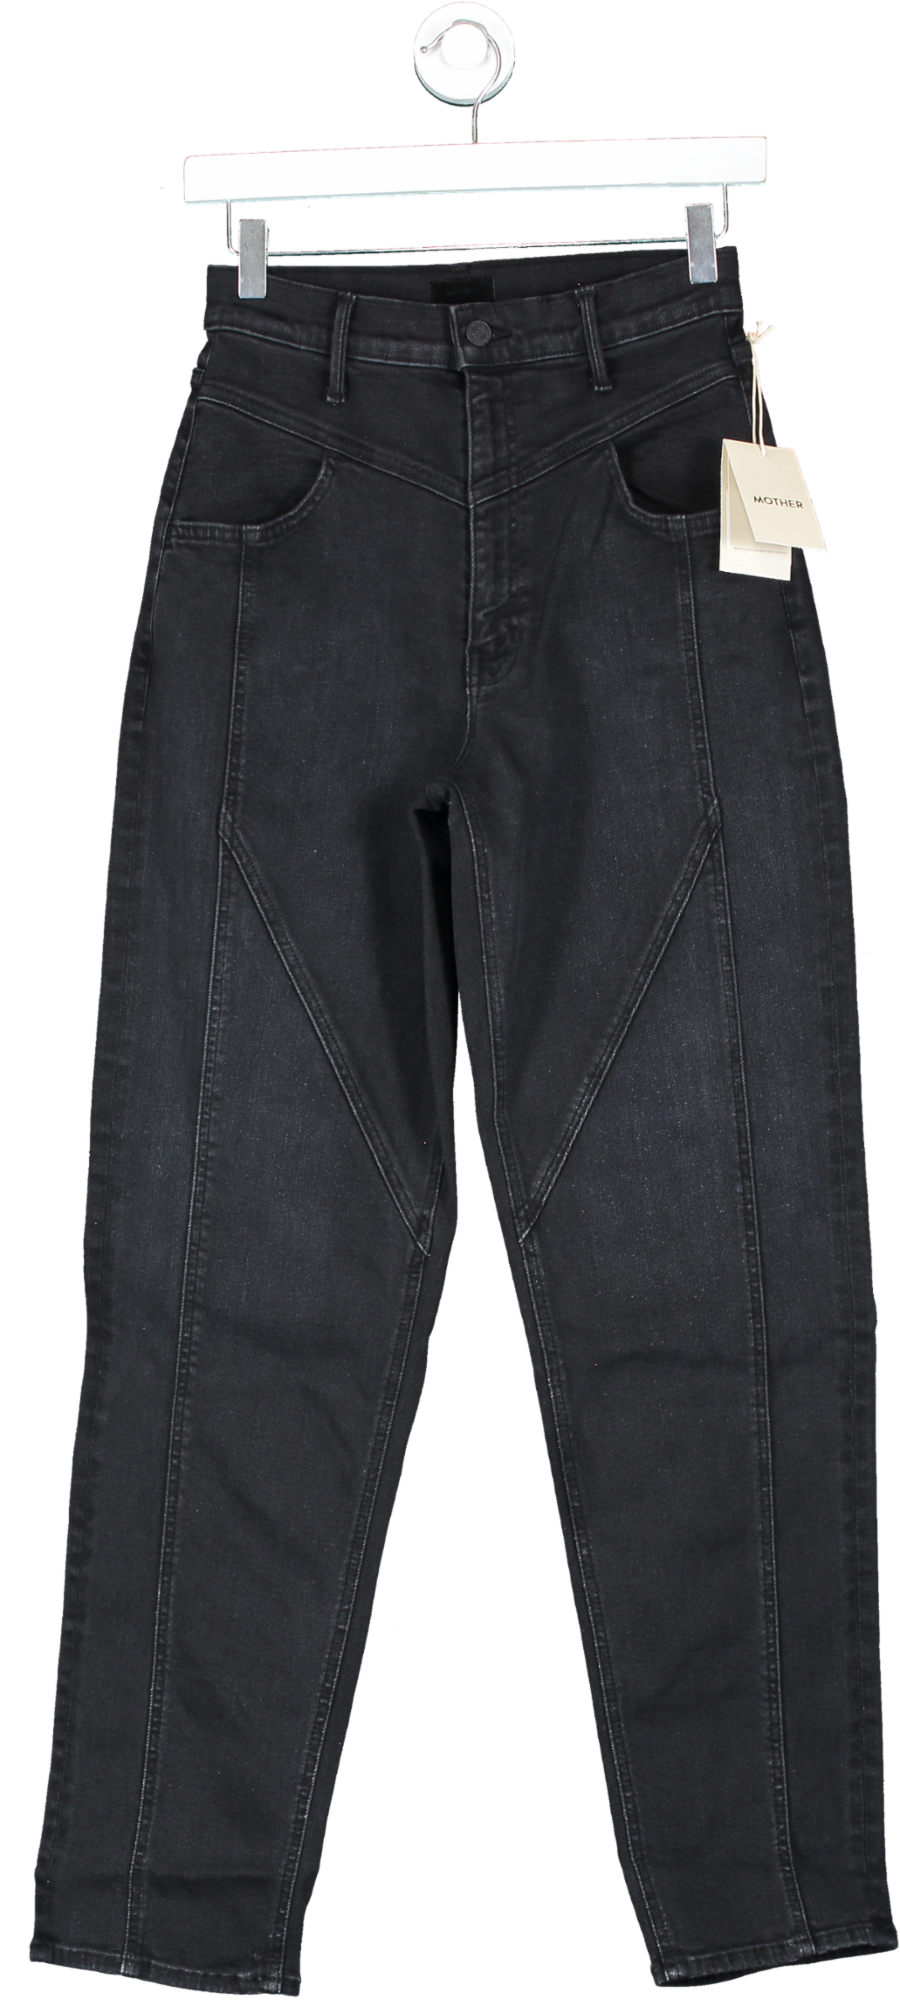 Mother Black High Waisted Pointy Study Nerdy jeans UK 6